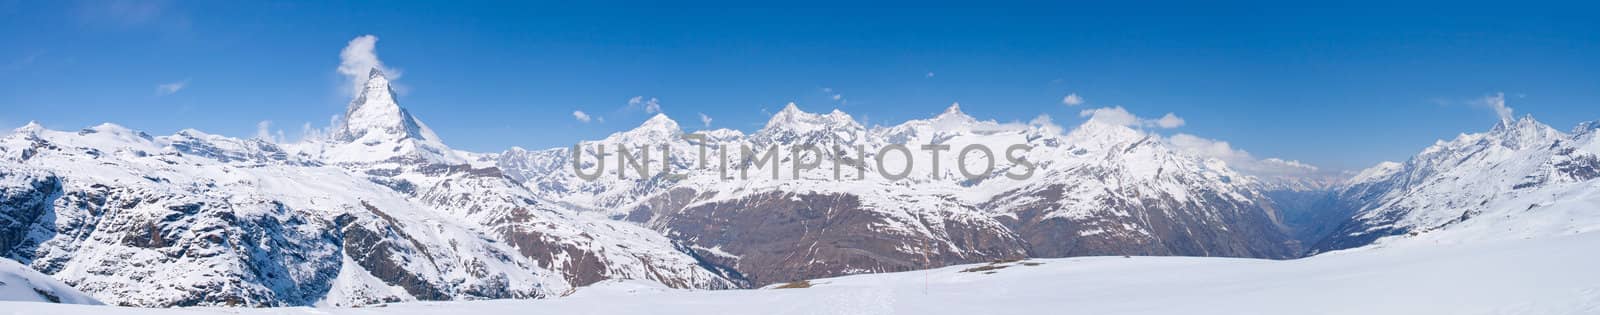 Panorama of Snow Mountain Range Landscape at Matterhorn Peak Alps Alpine Region Switzerland